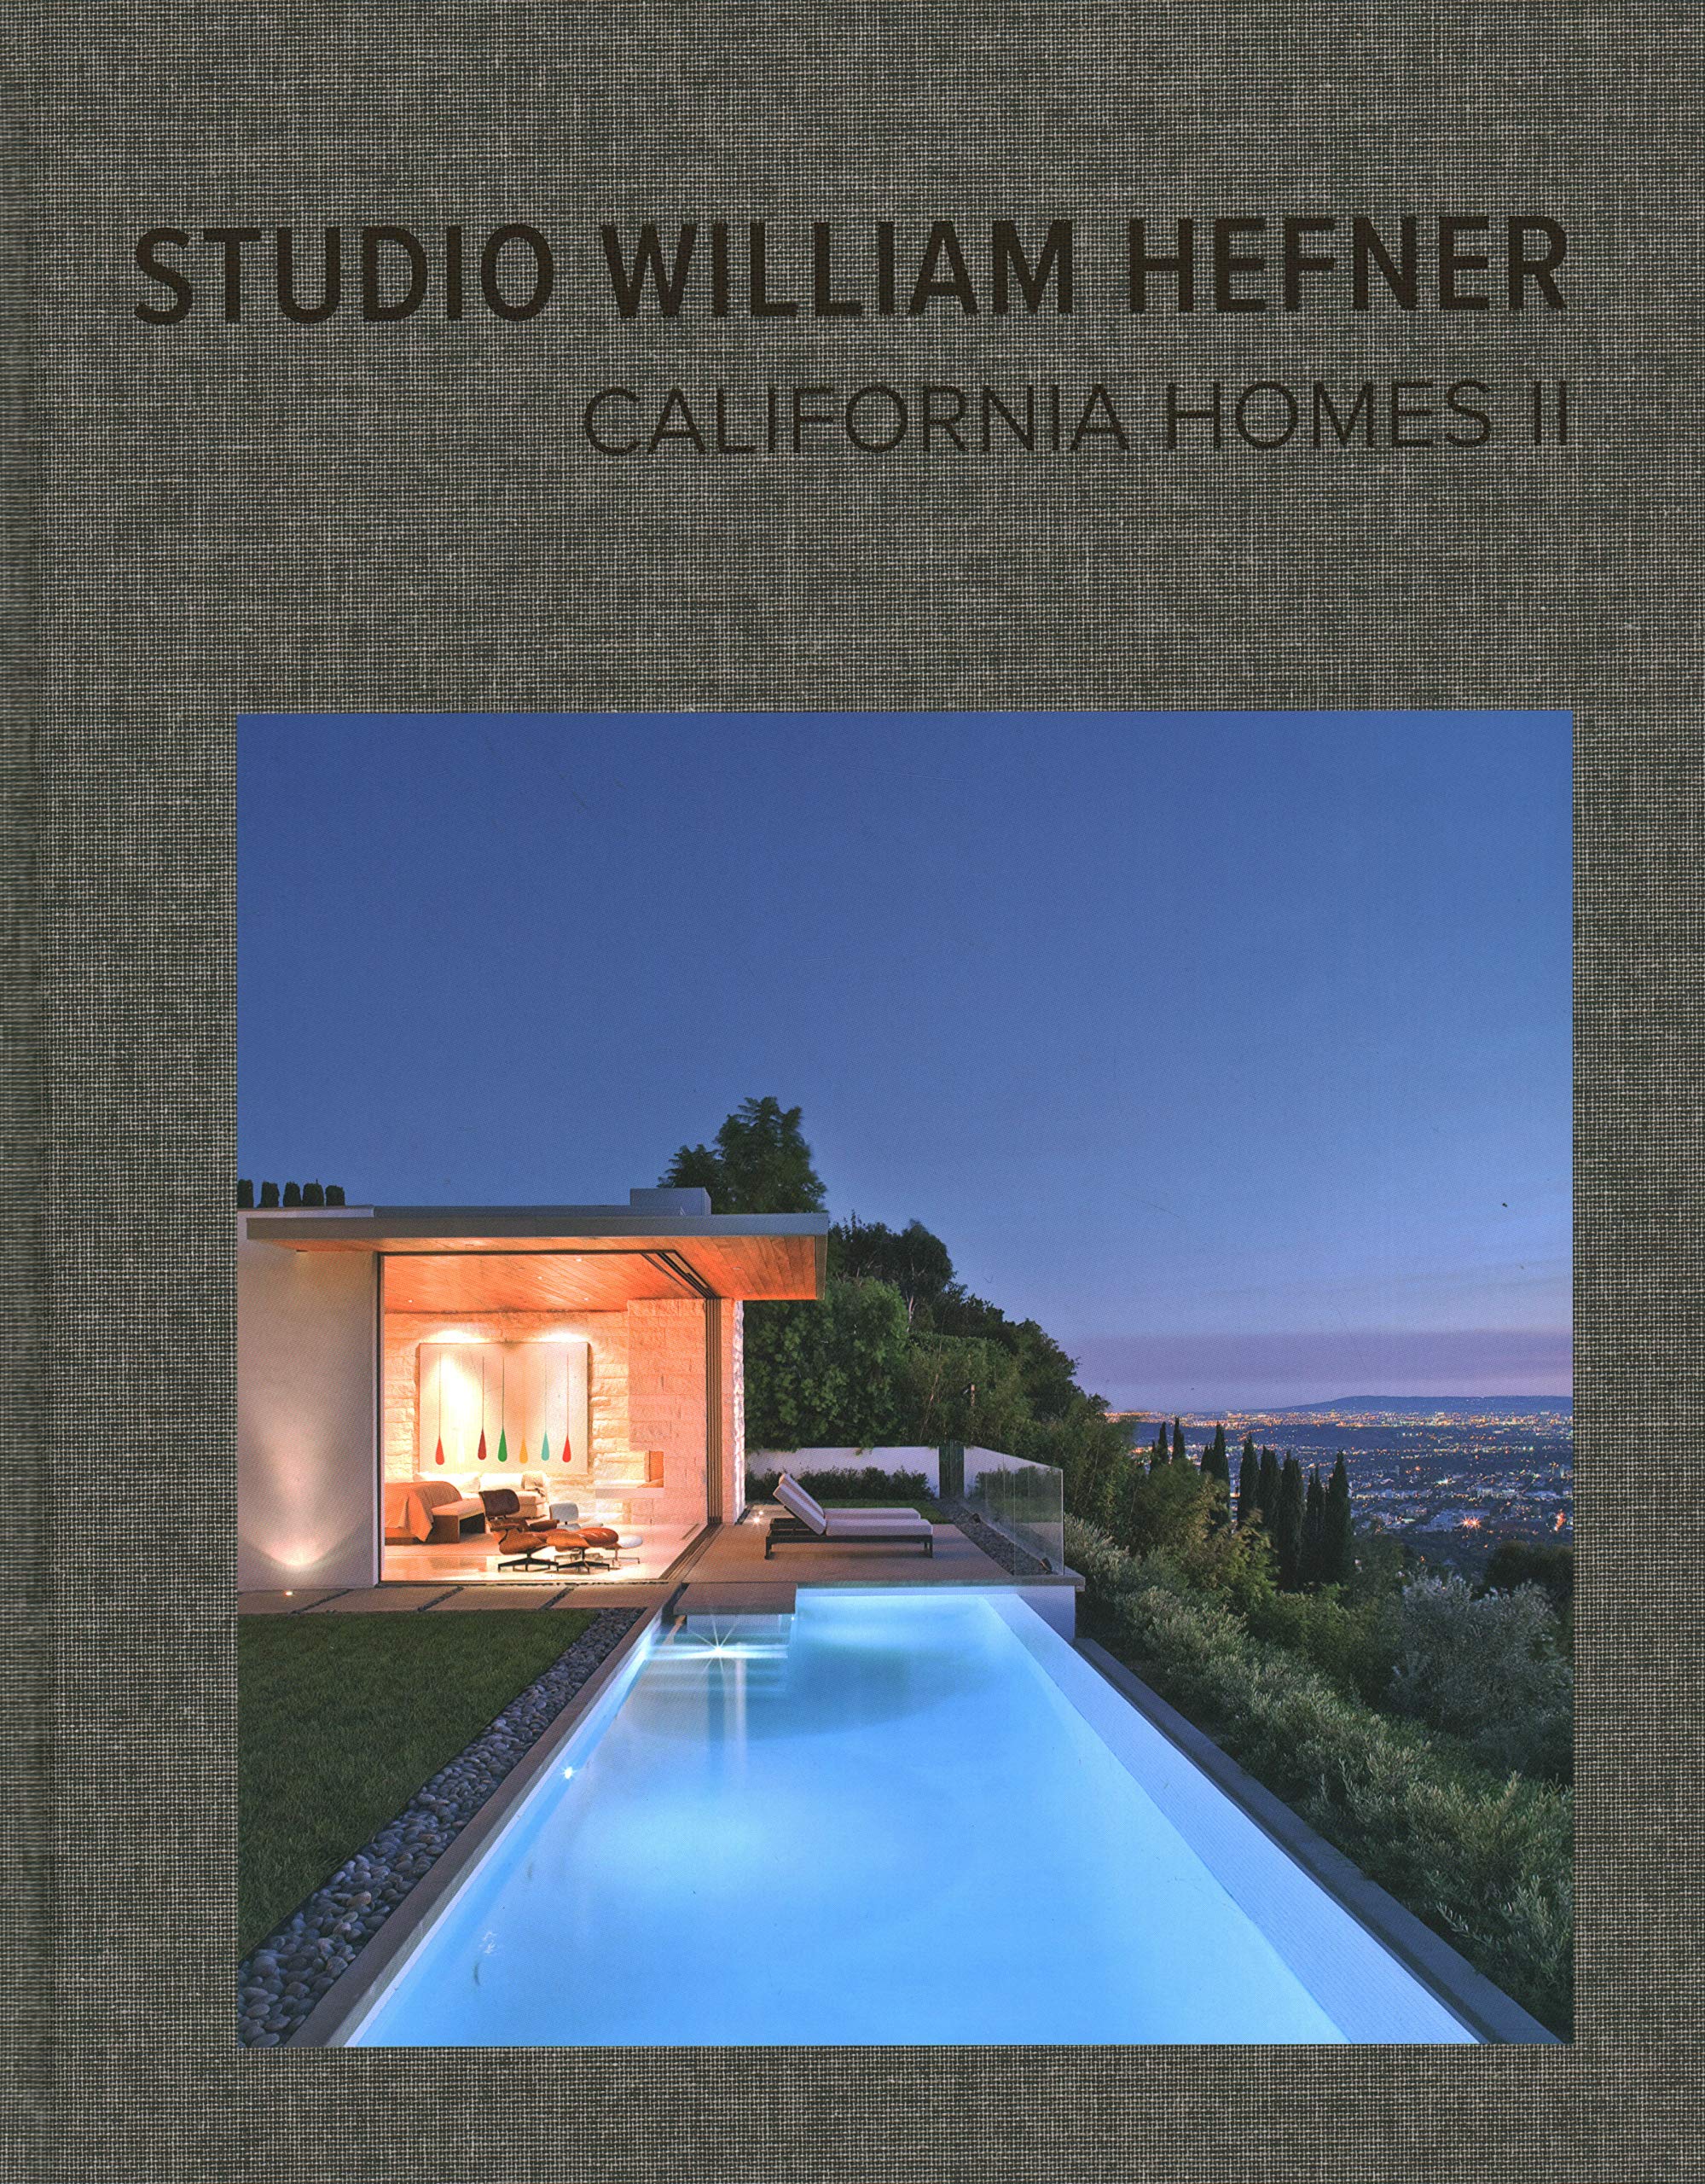 Studio William Hefner. California Homes II